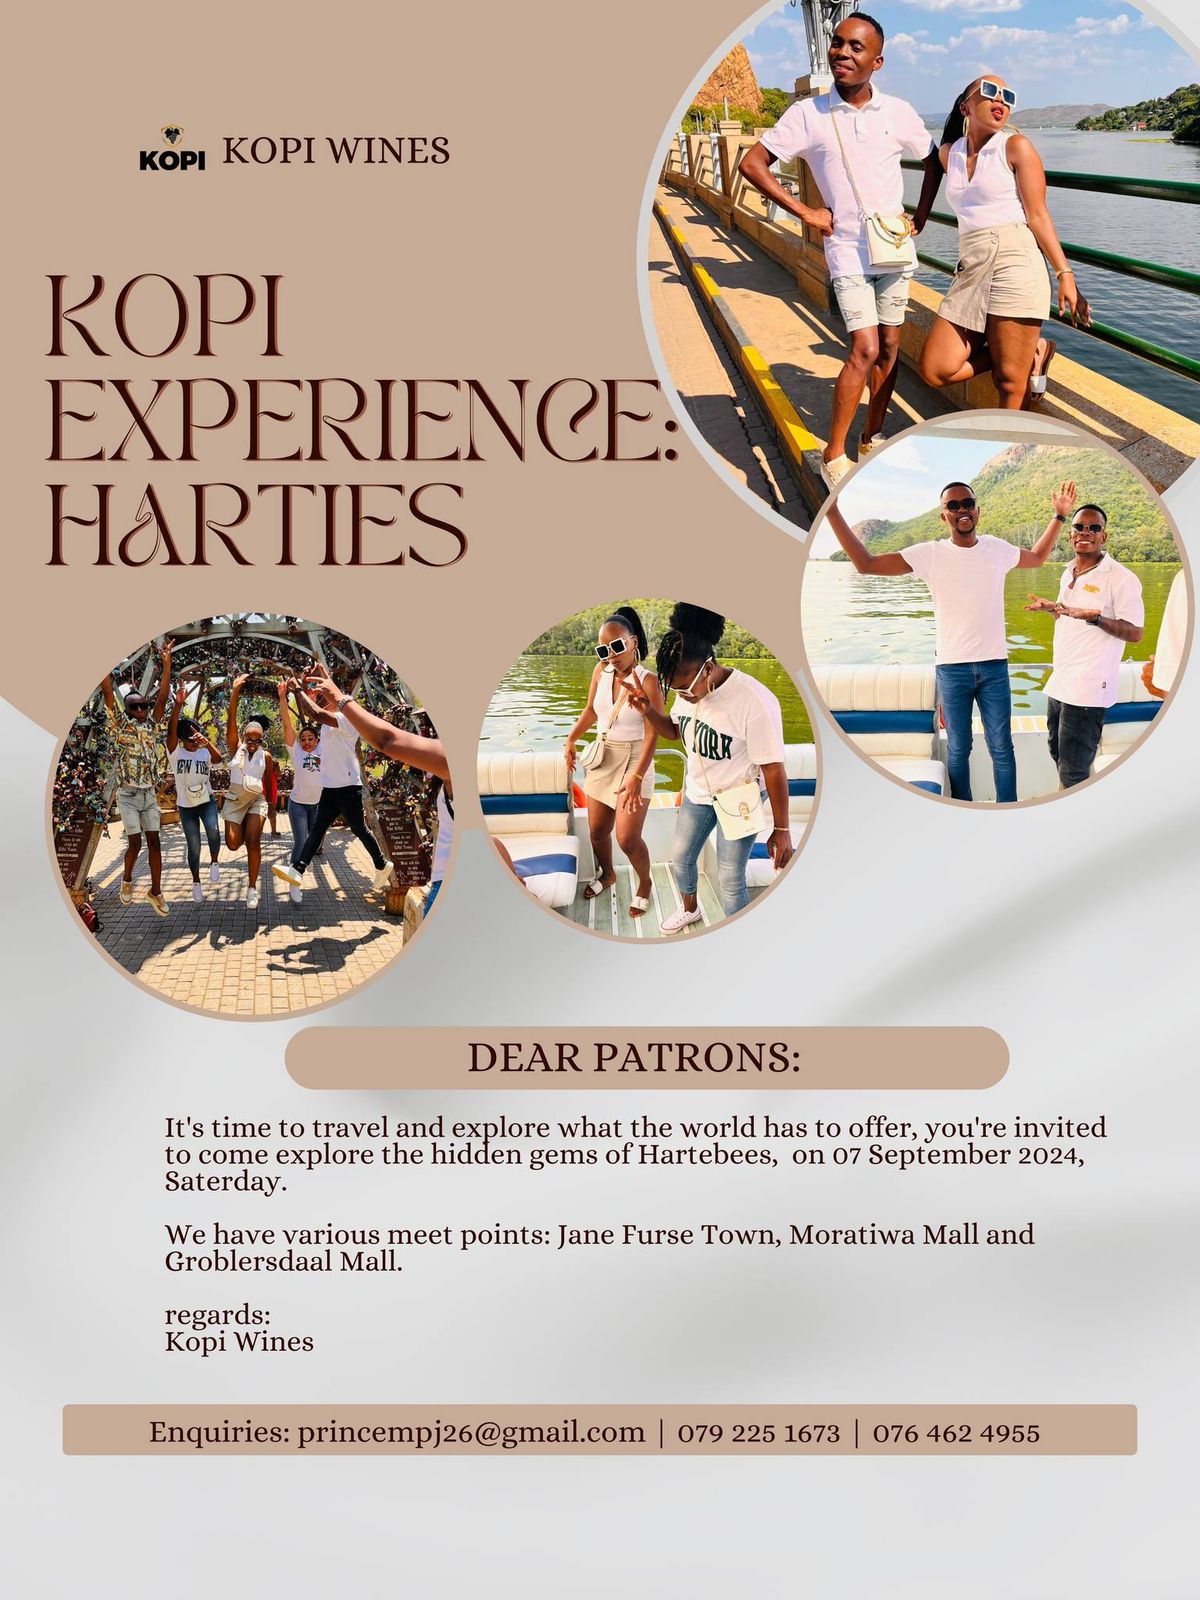 Kopi Experience: Harties